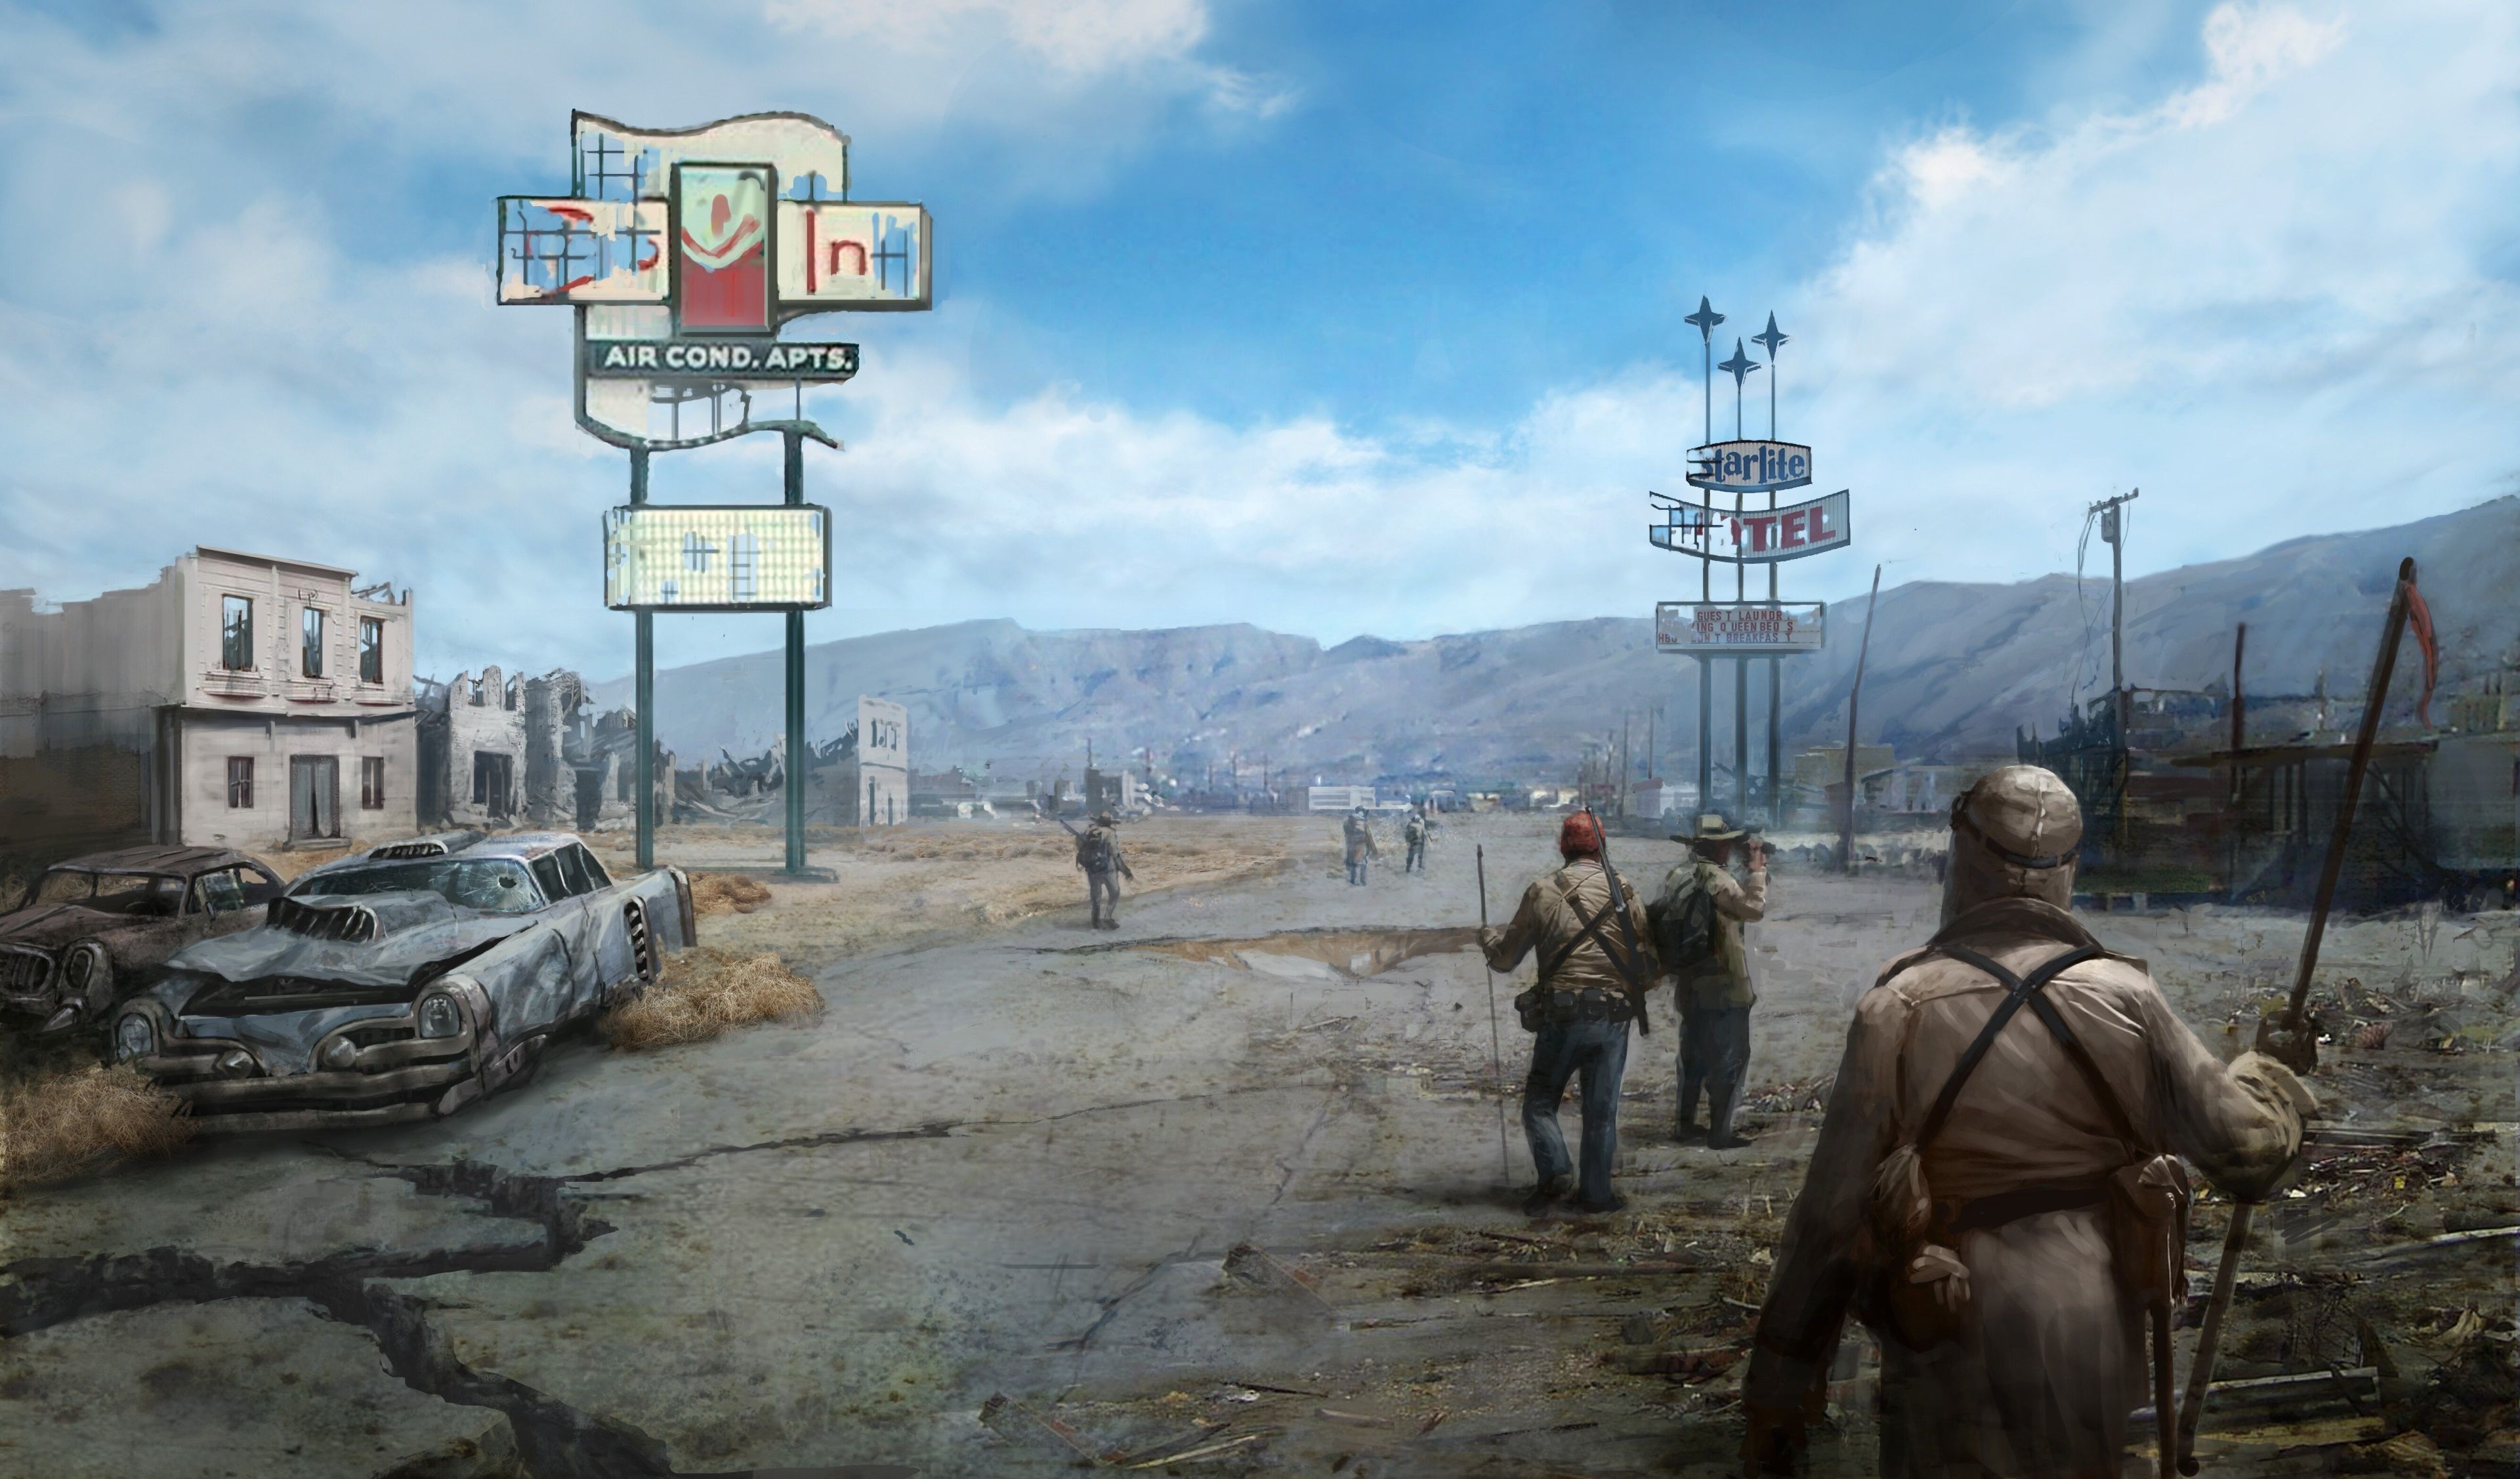 fallout new vegas 4k wallpaper for desktop background. Fallout new vegas, Fallout concept art, Apocalyptic